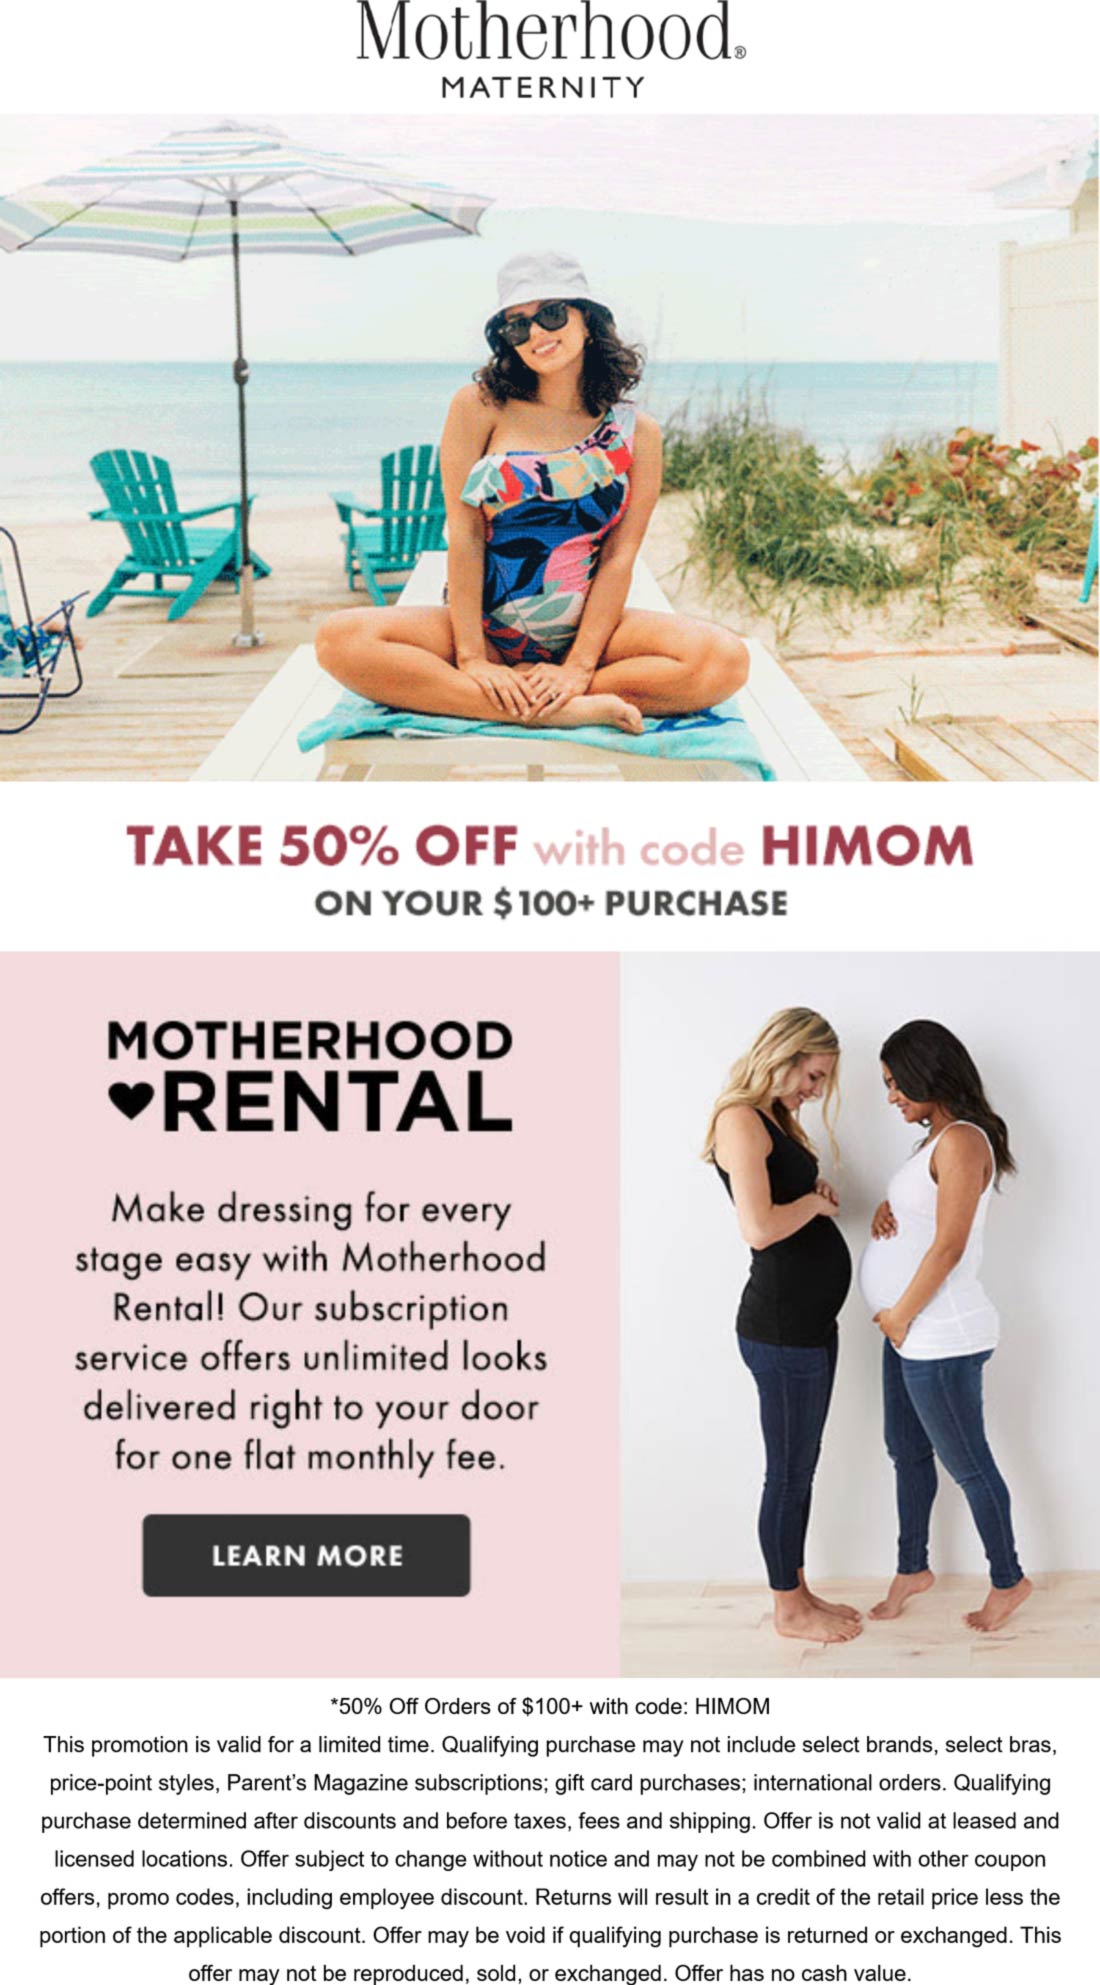 Motherhood Maternity stores Coupon  50% off $100 at Motherhood Maternity via promo code HIMOM #motherhoodmaternity 